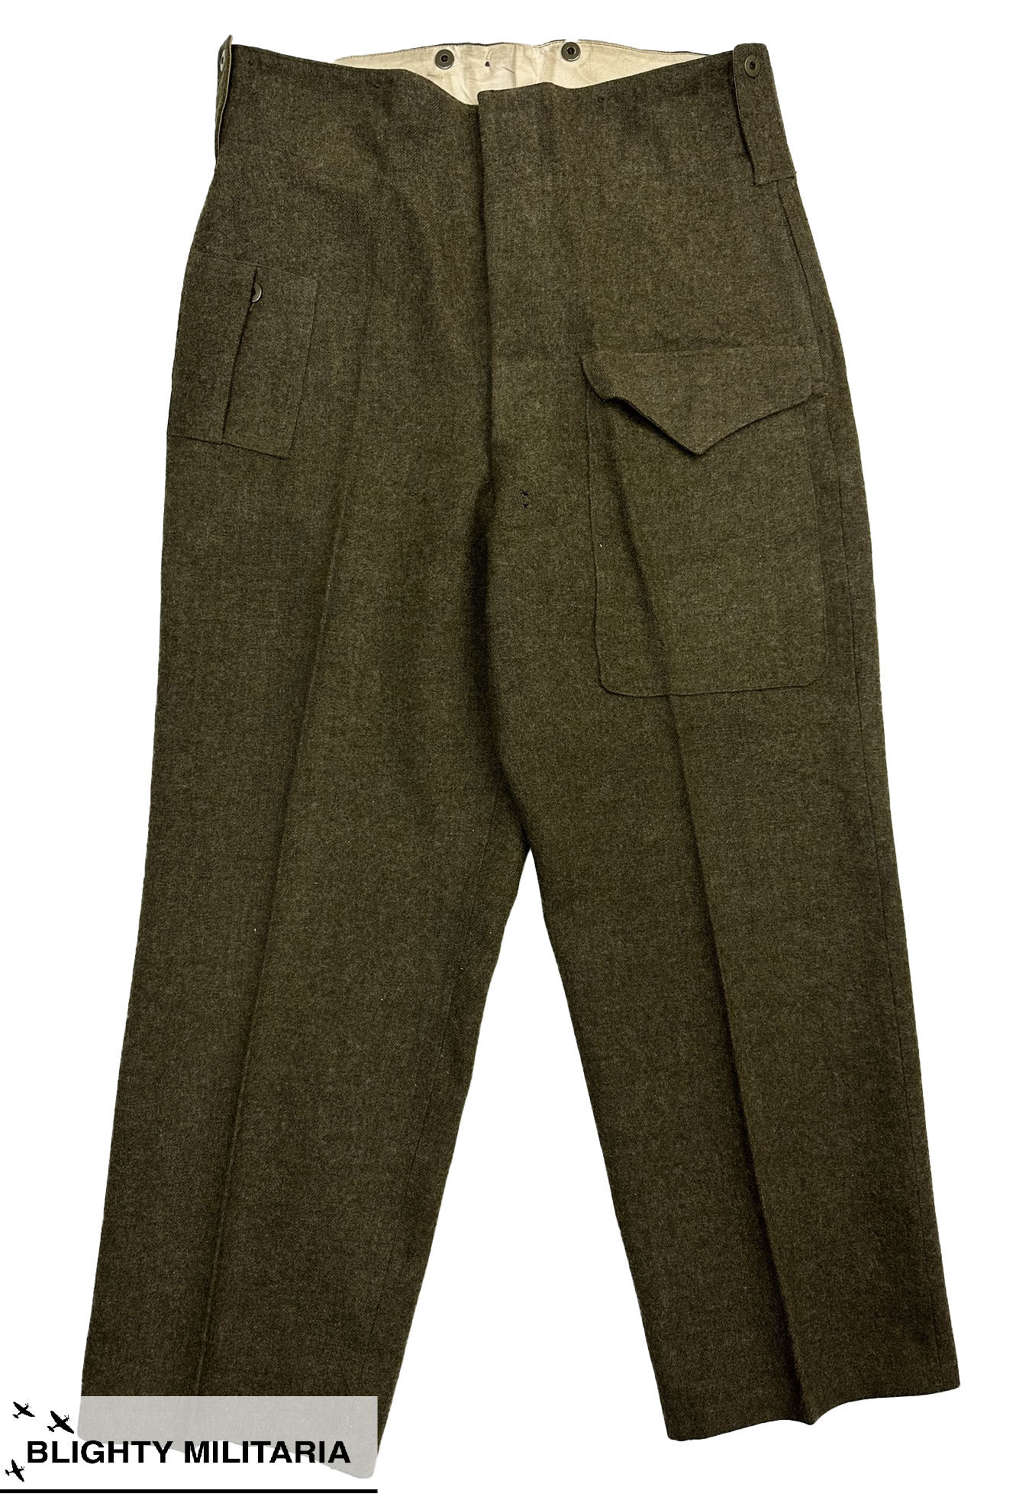 Original 1943 Dated Canadian Battledress Trousers - Size 38 x 31